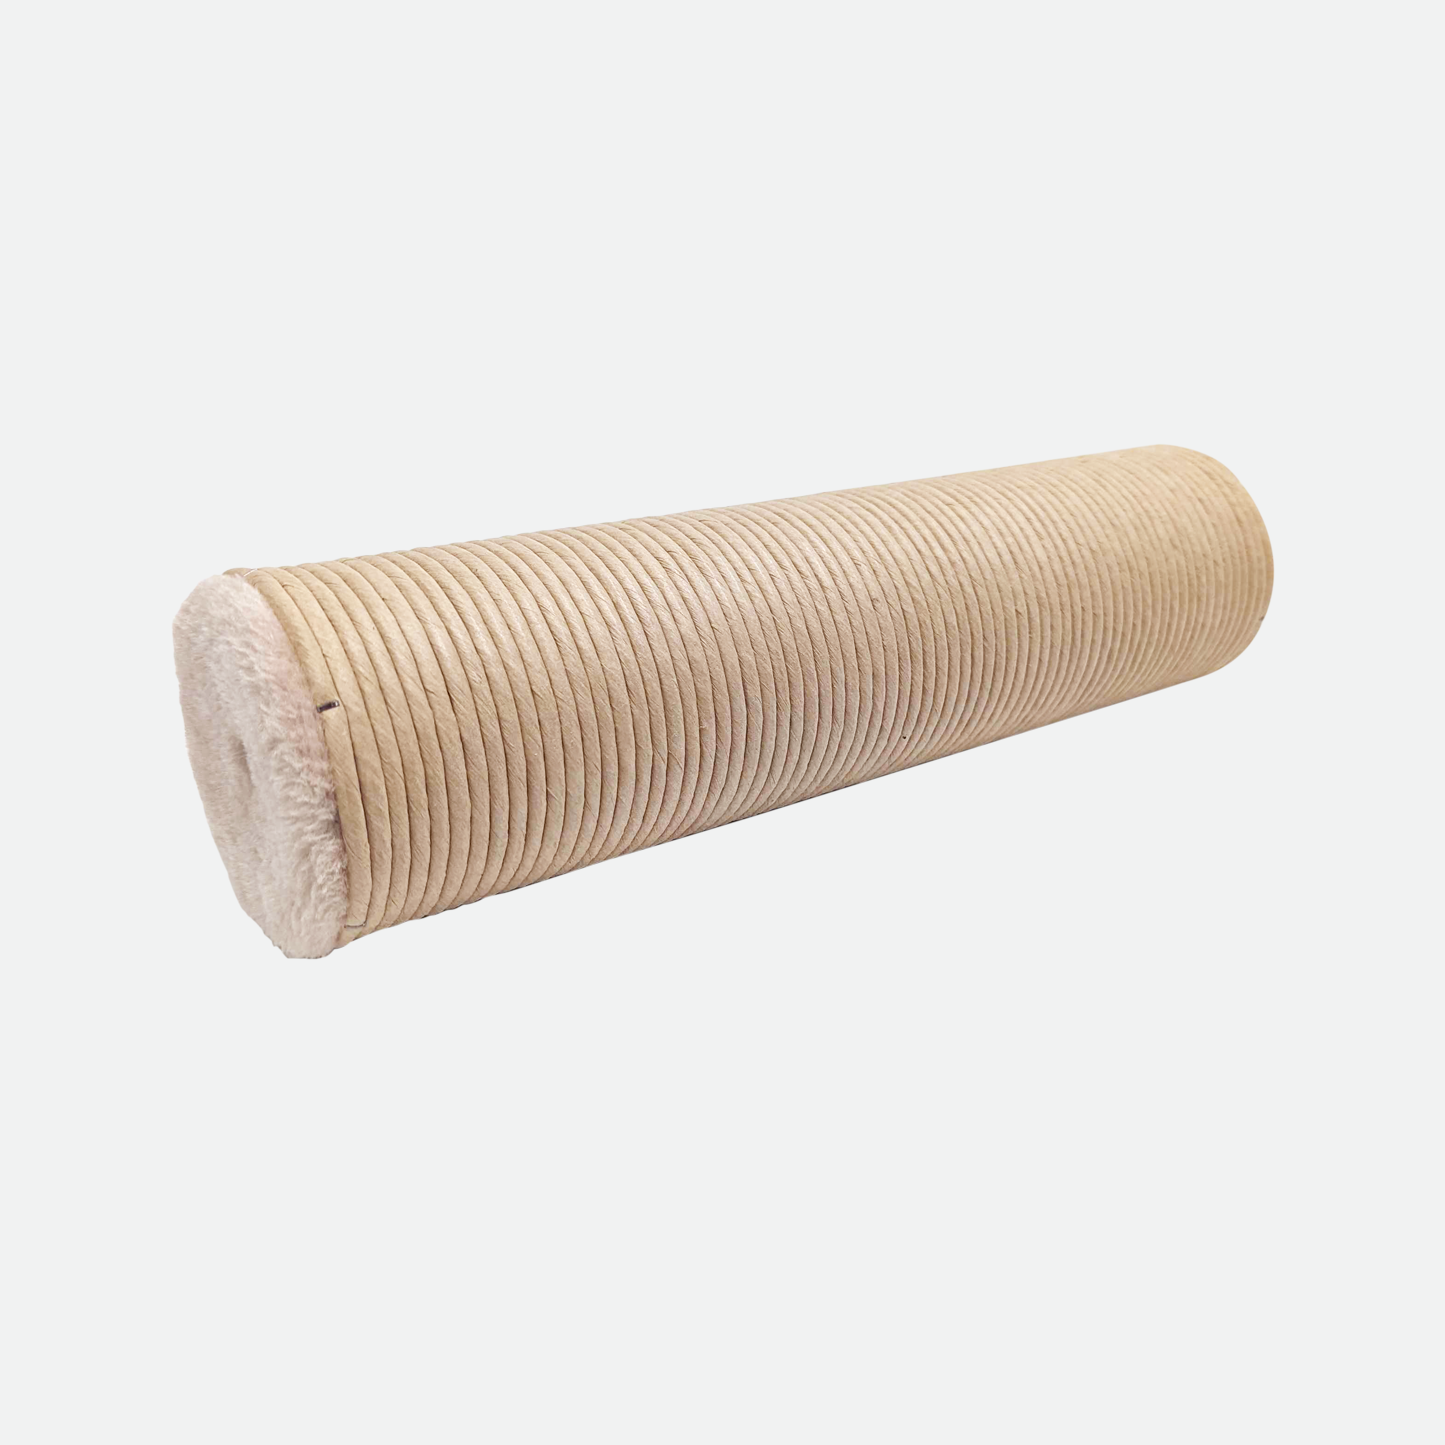 Additional paper rope scratcher post for Katt3EVO Classic, beige